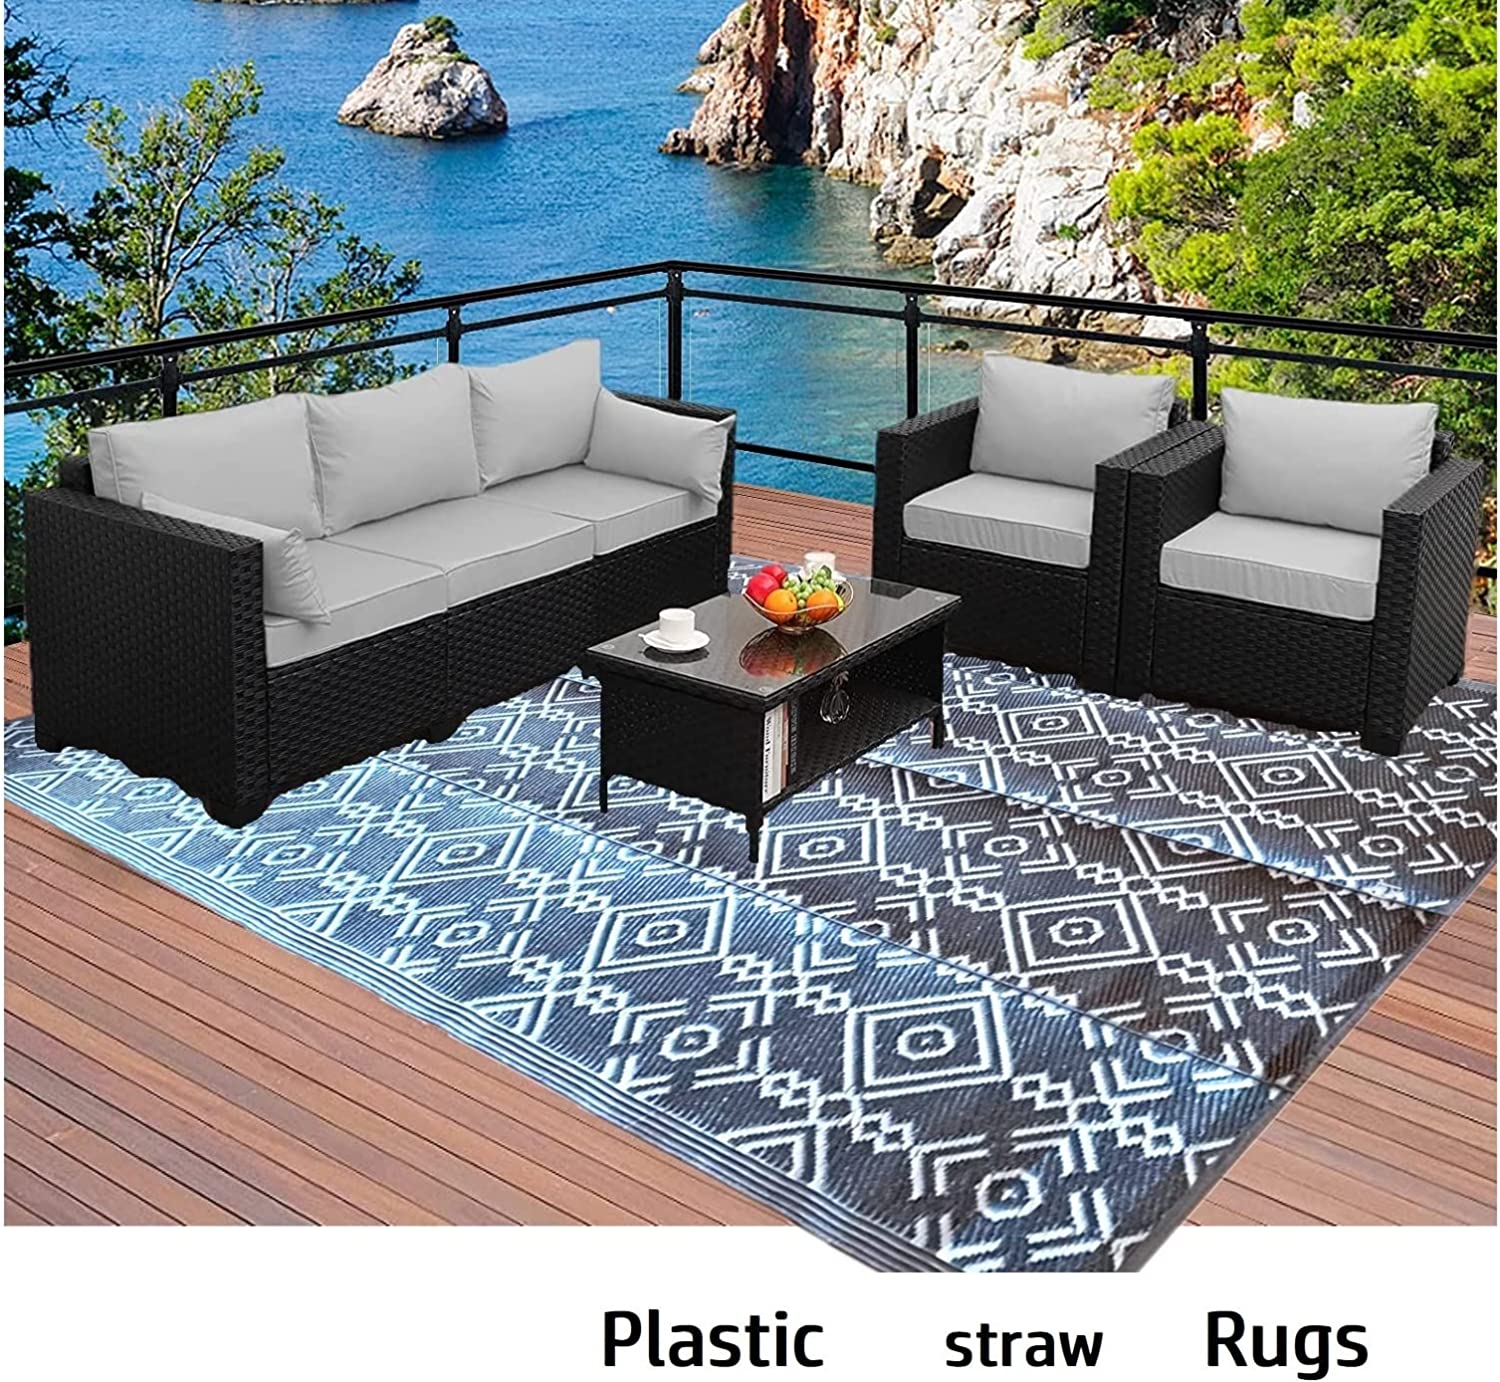 Outdoor rugs geometric beautiful grey Portable waterproof